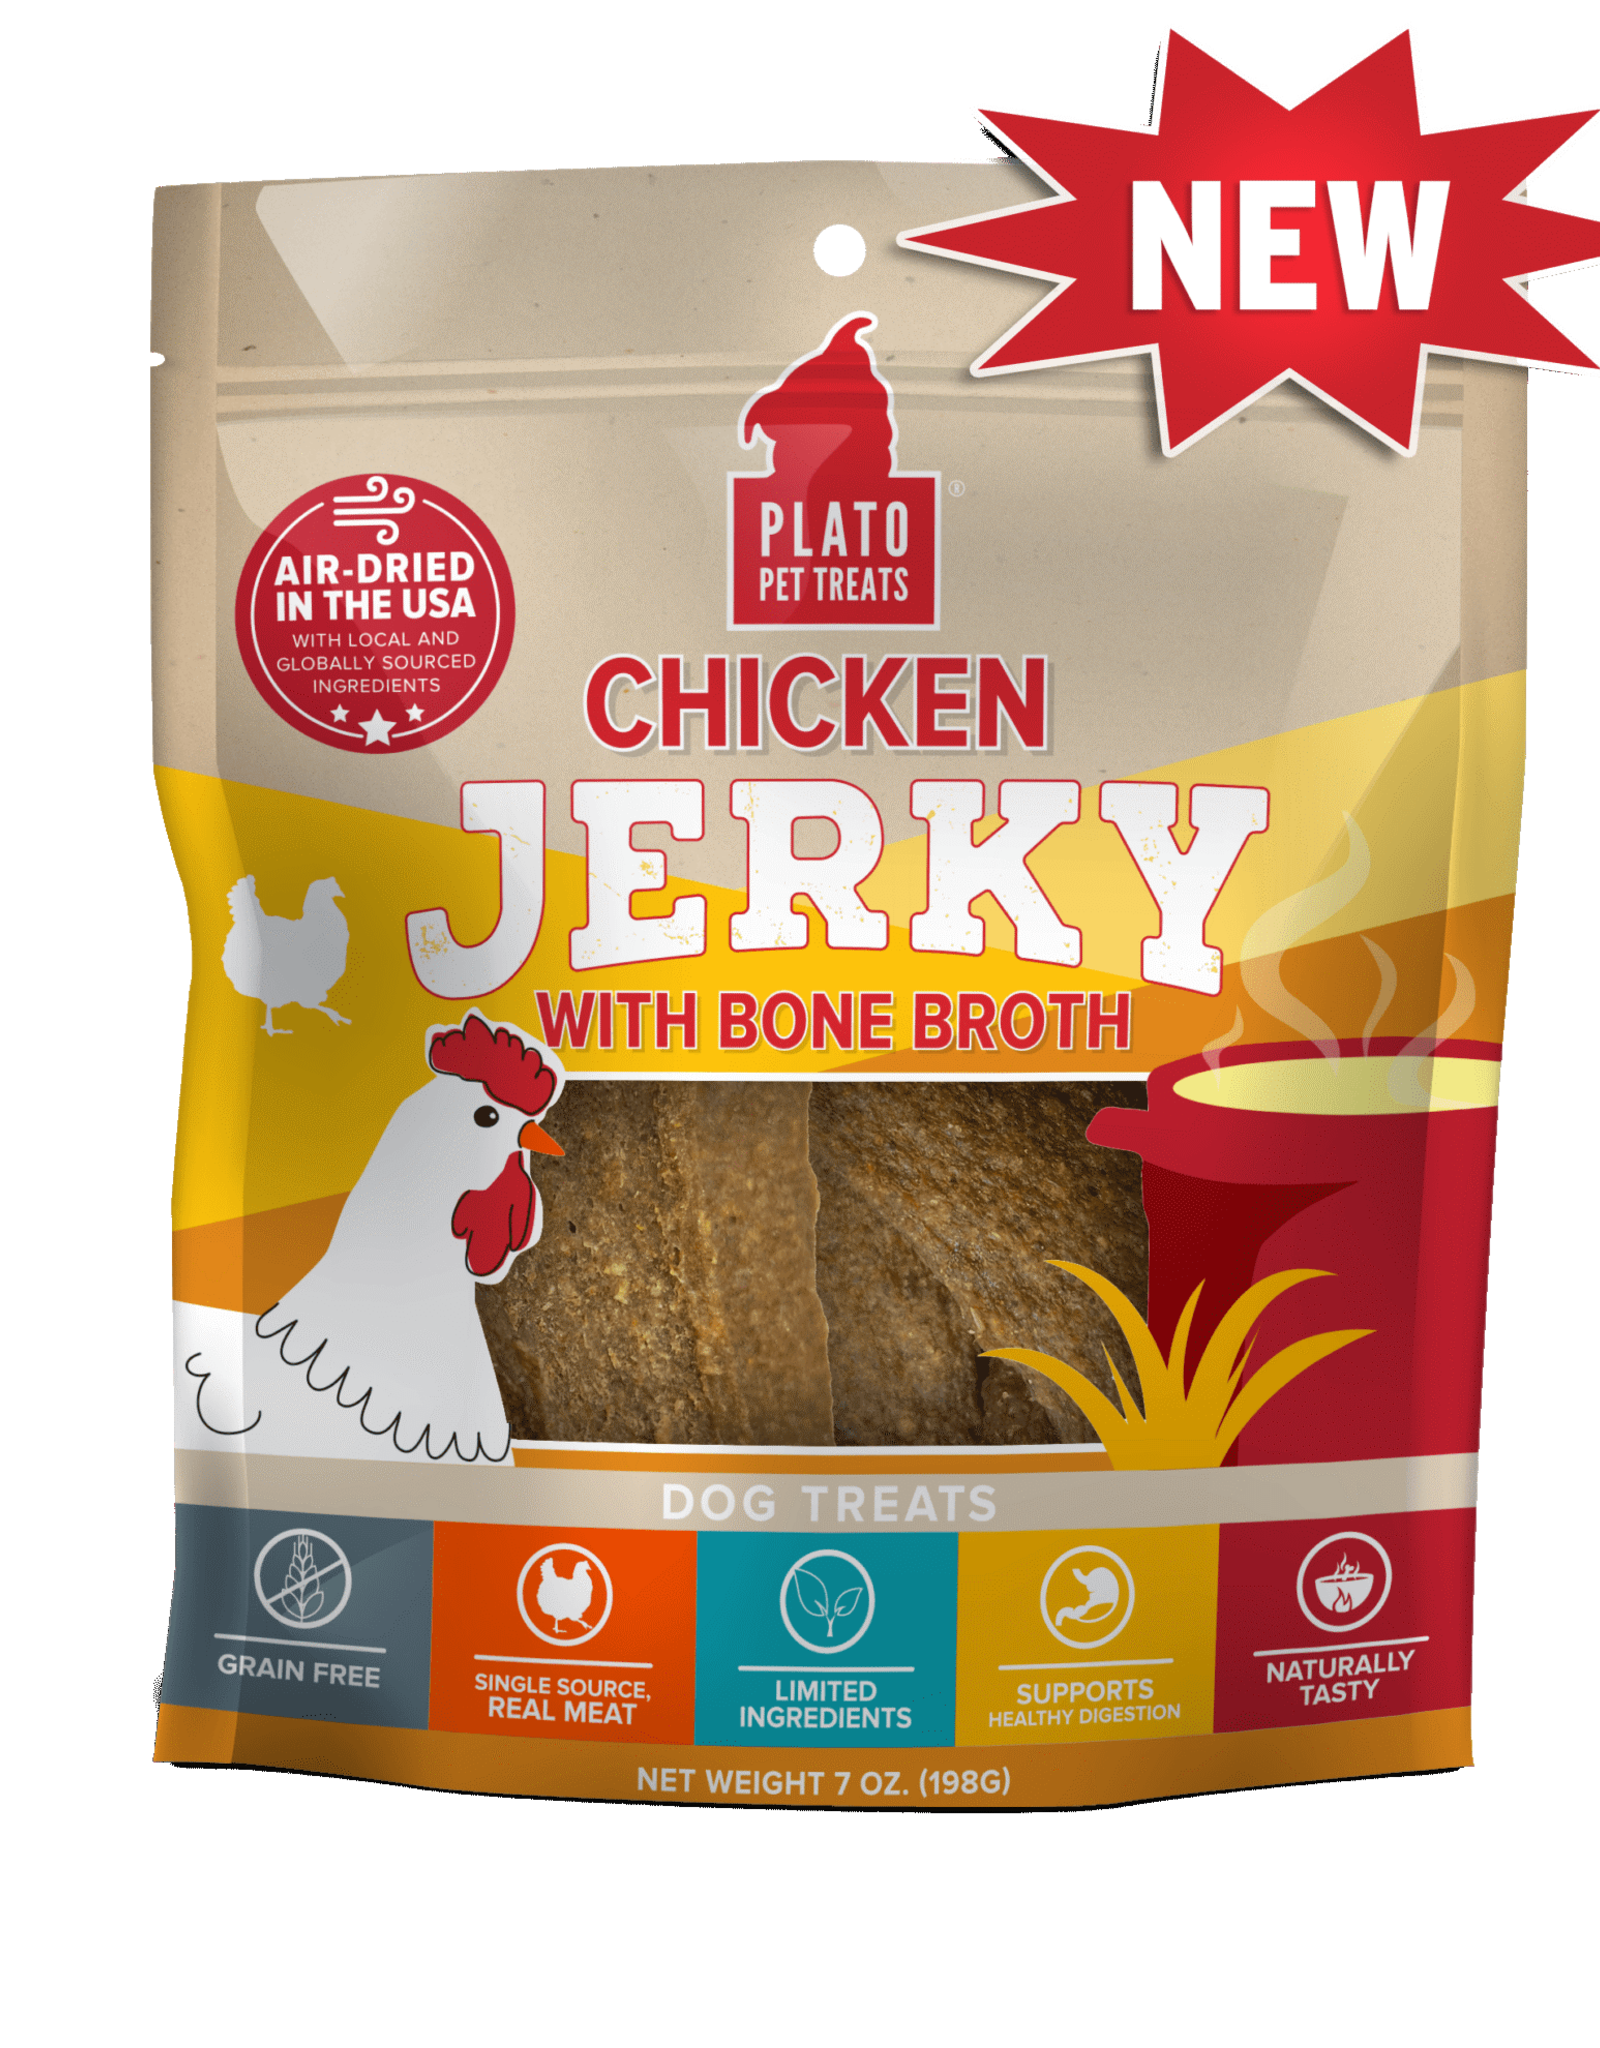 Plato Pet Treats Plato Chicken Jerky with Bone Broth